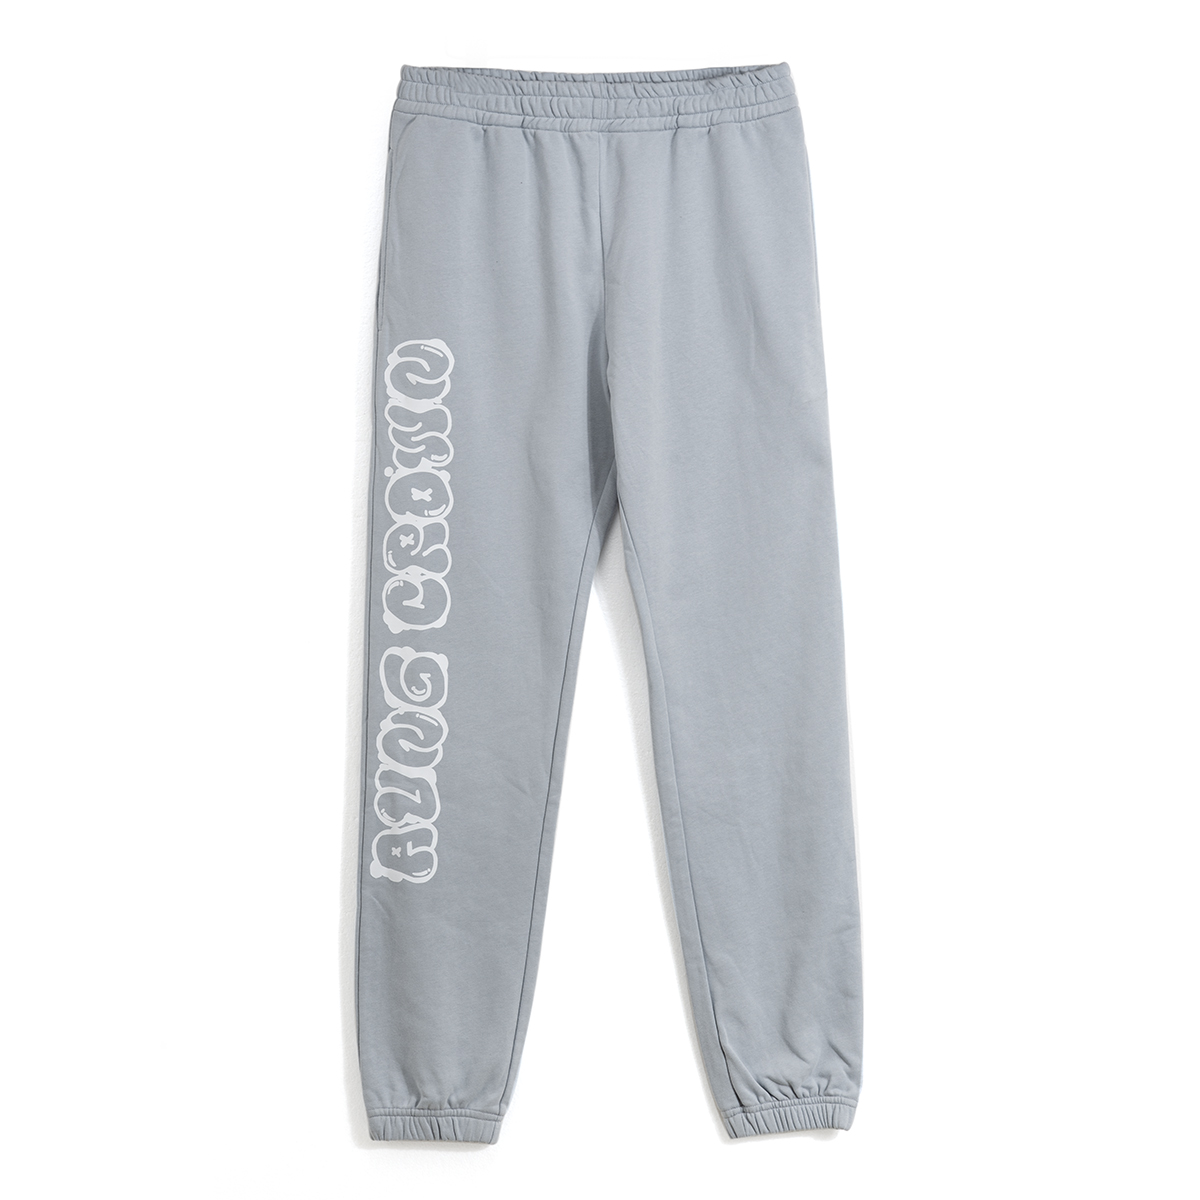 AungCrown designed brand men’s athletic casual sweatpants